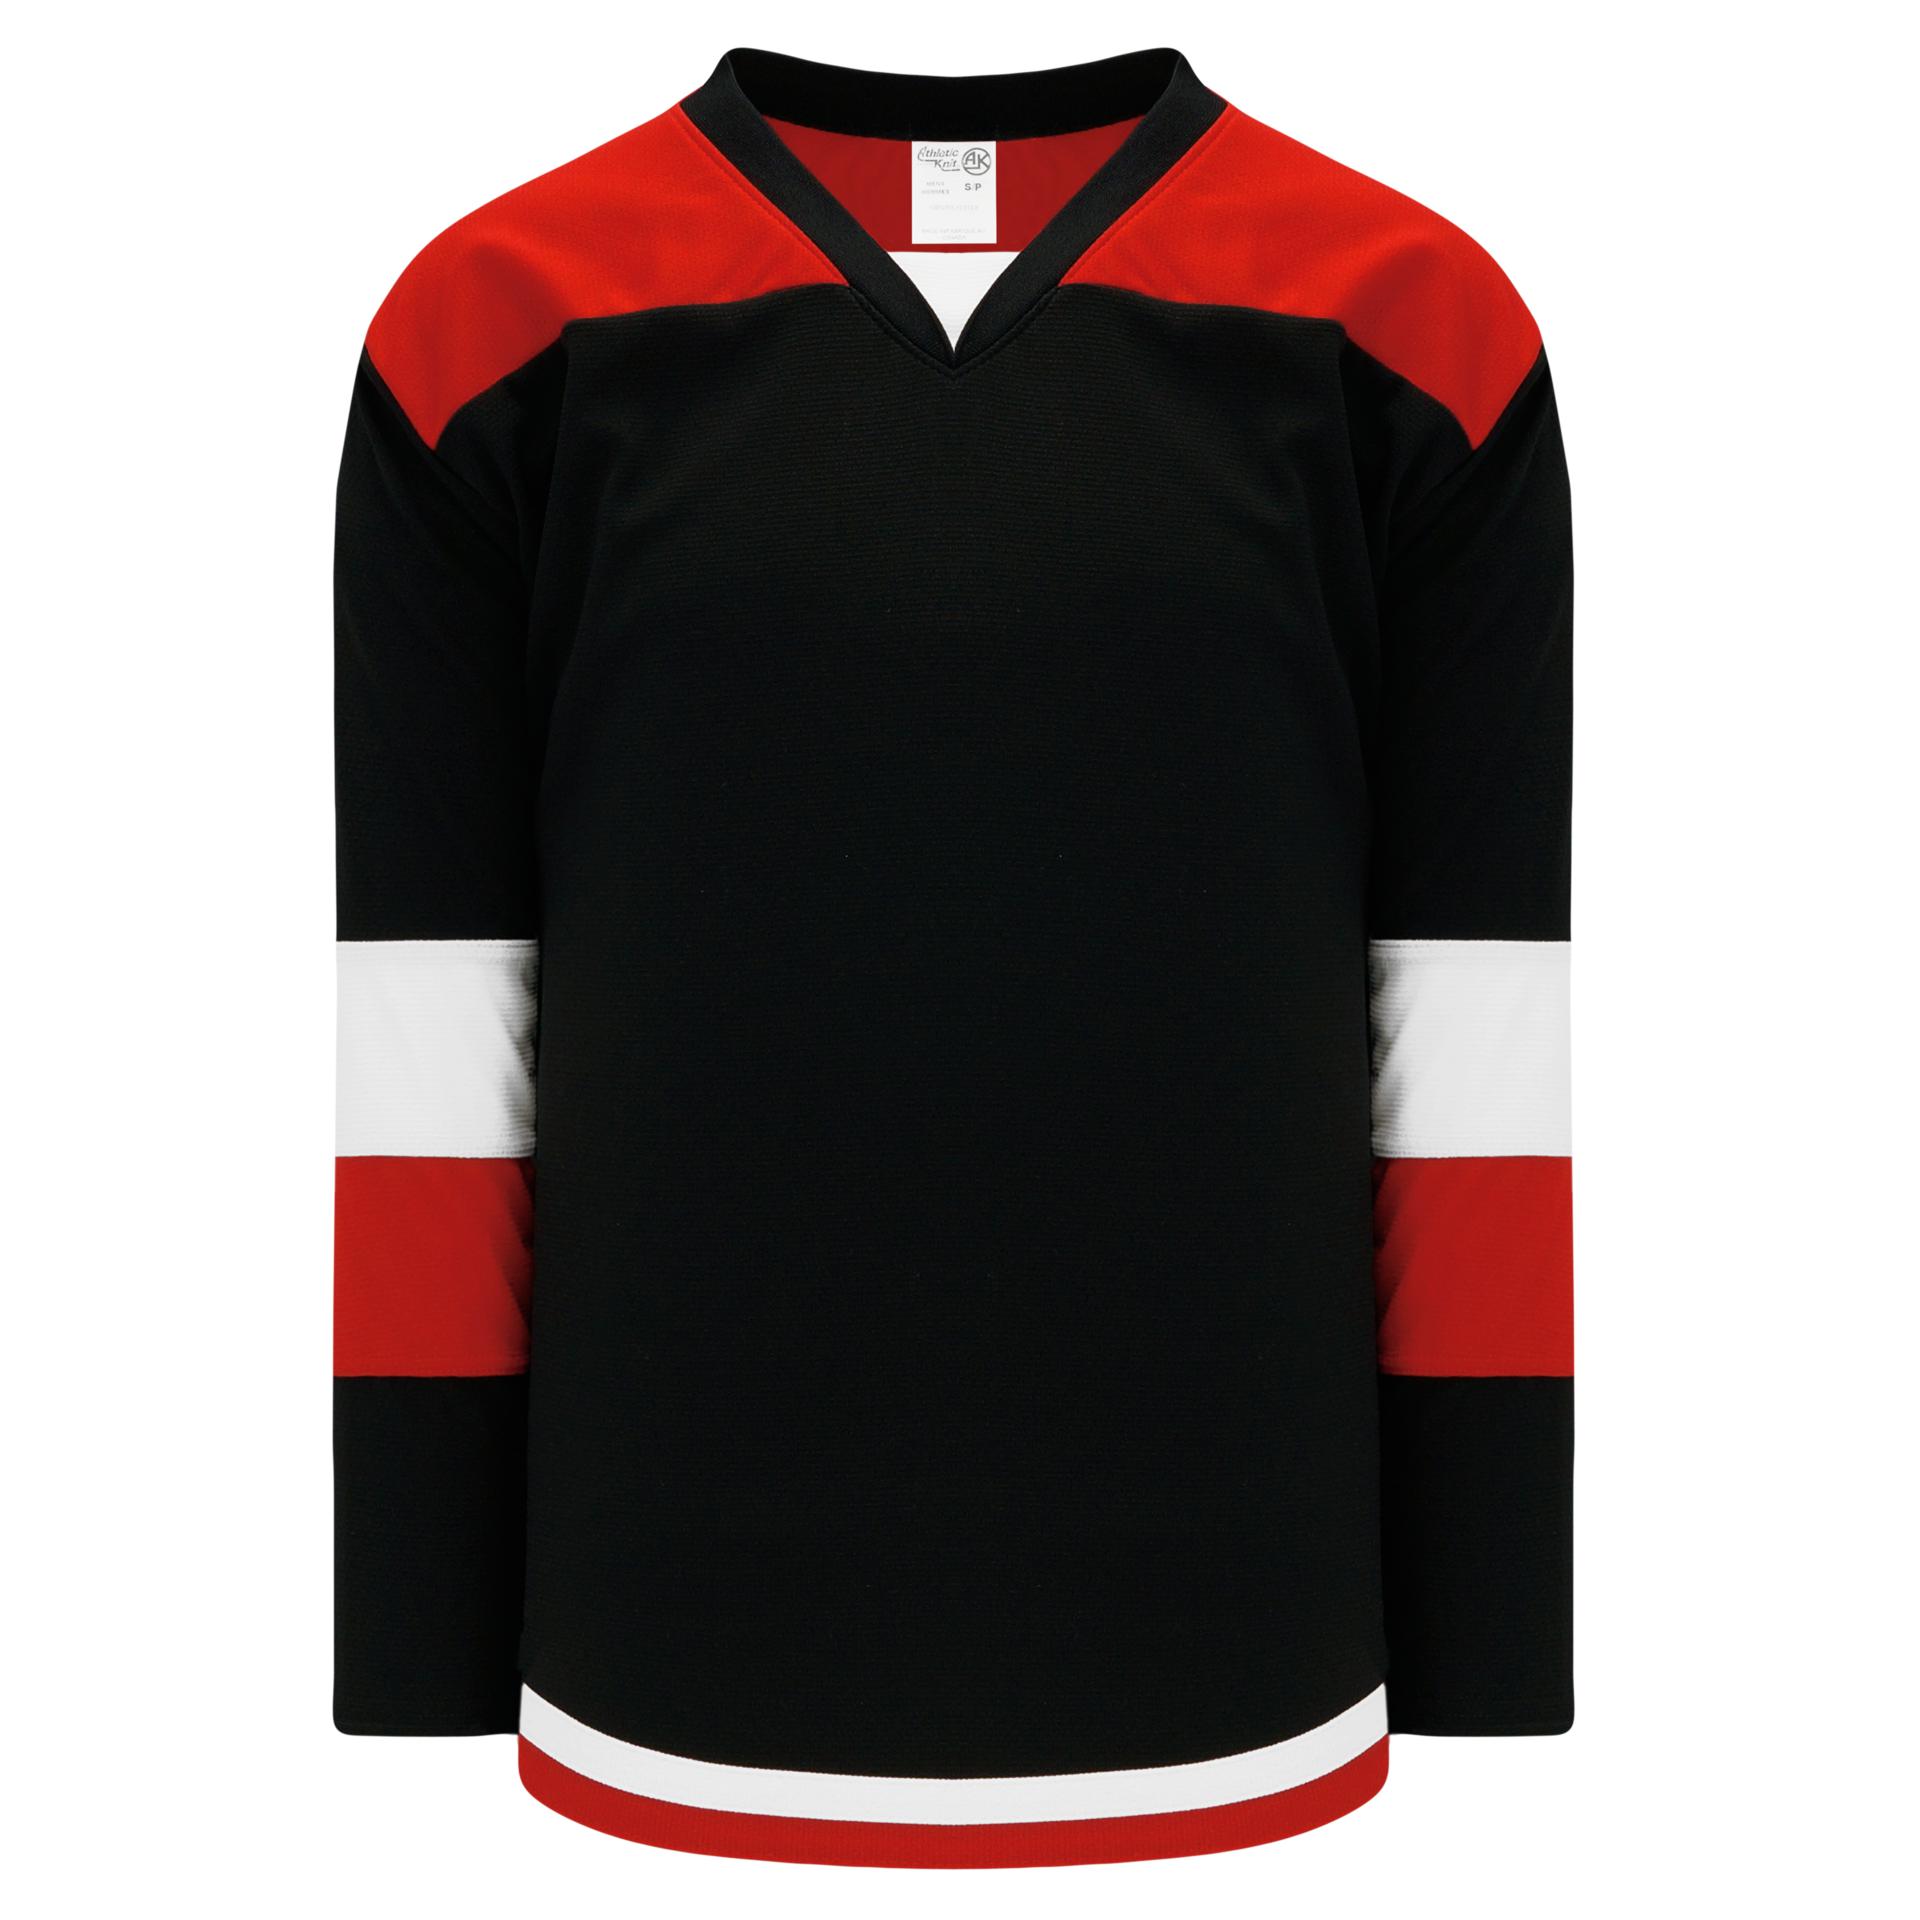 black red white jersey